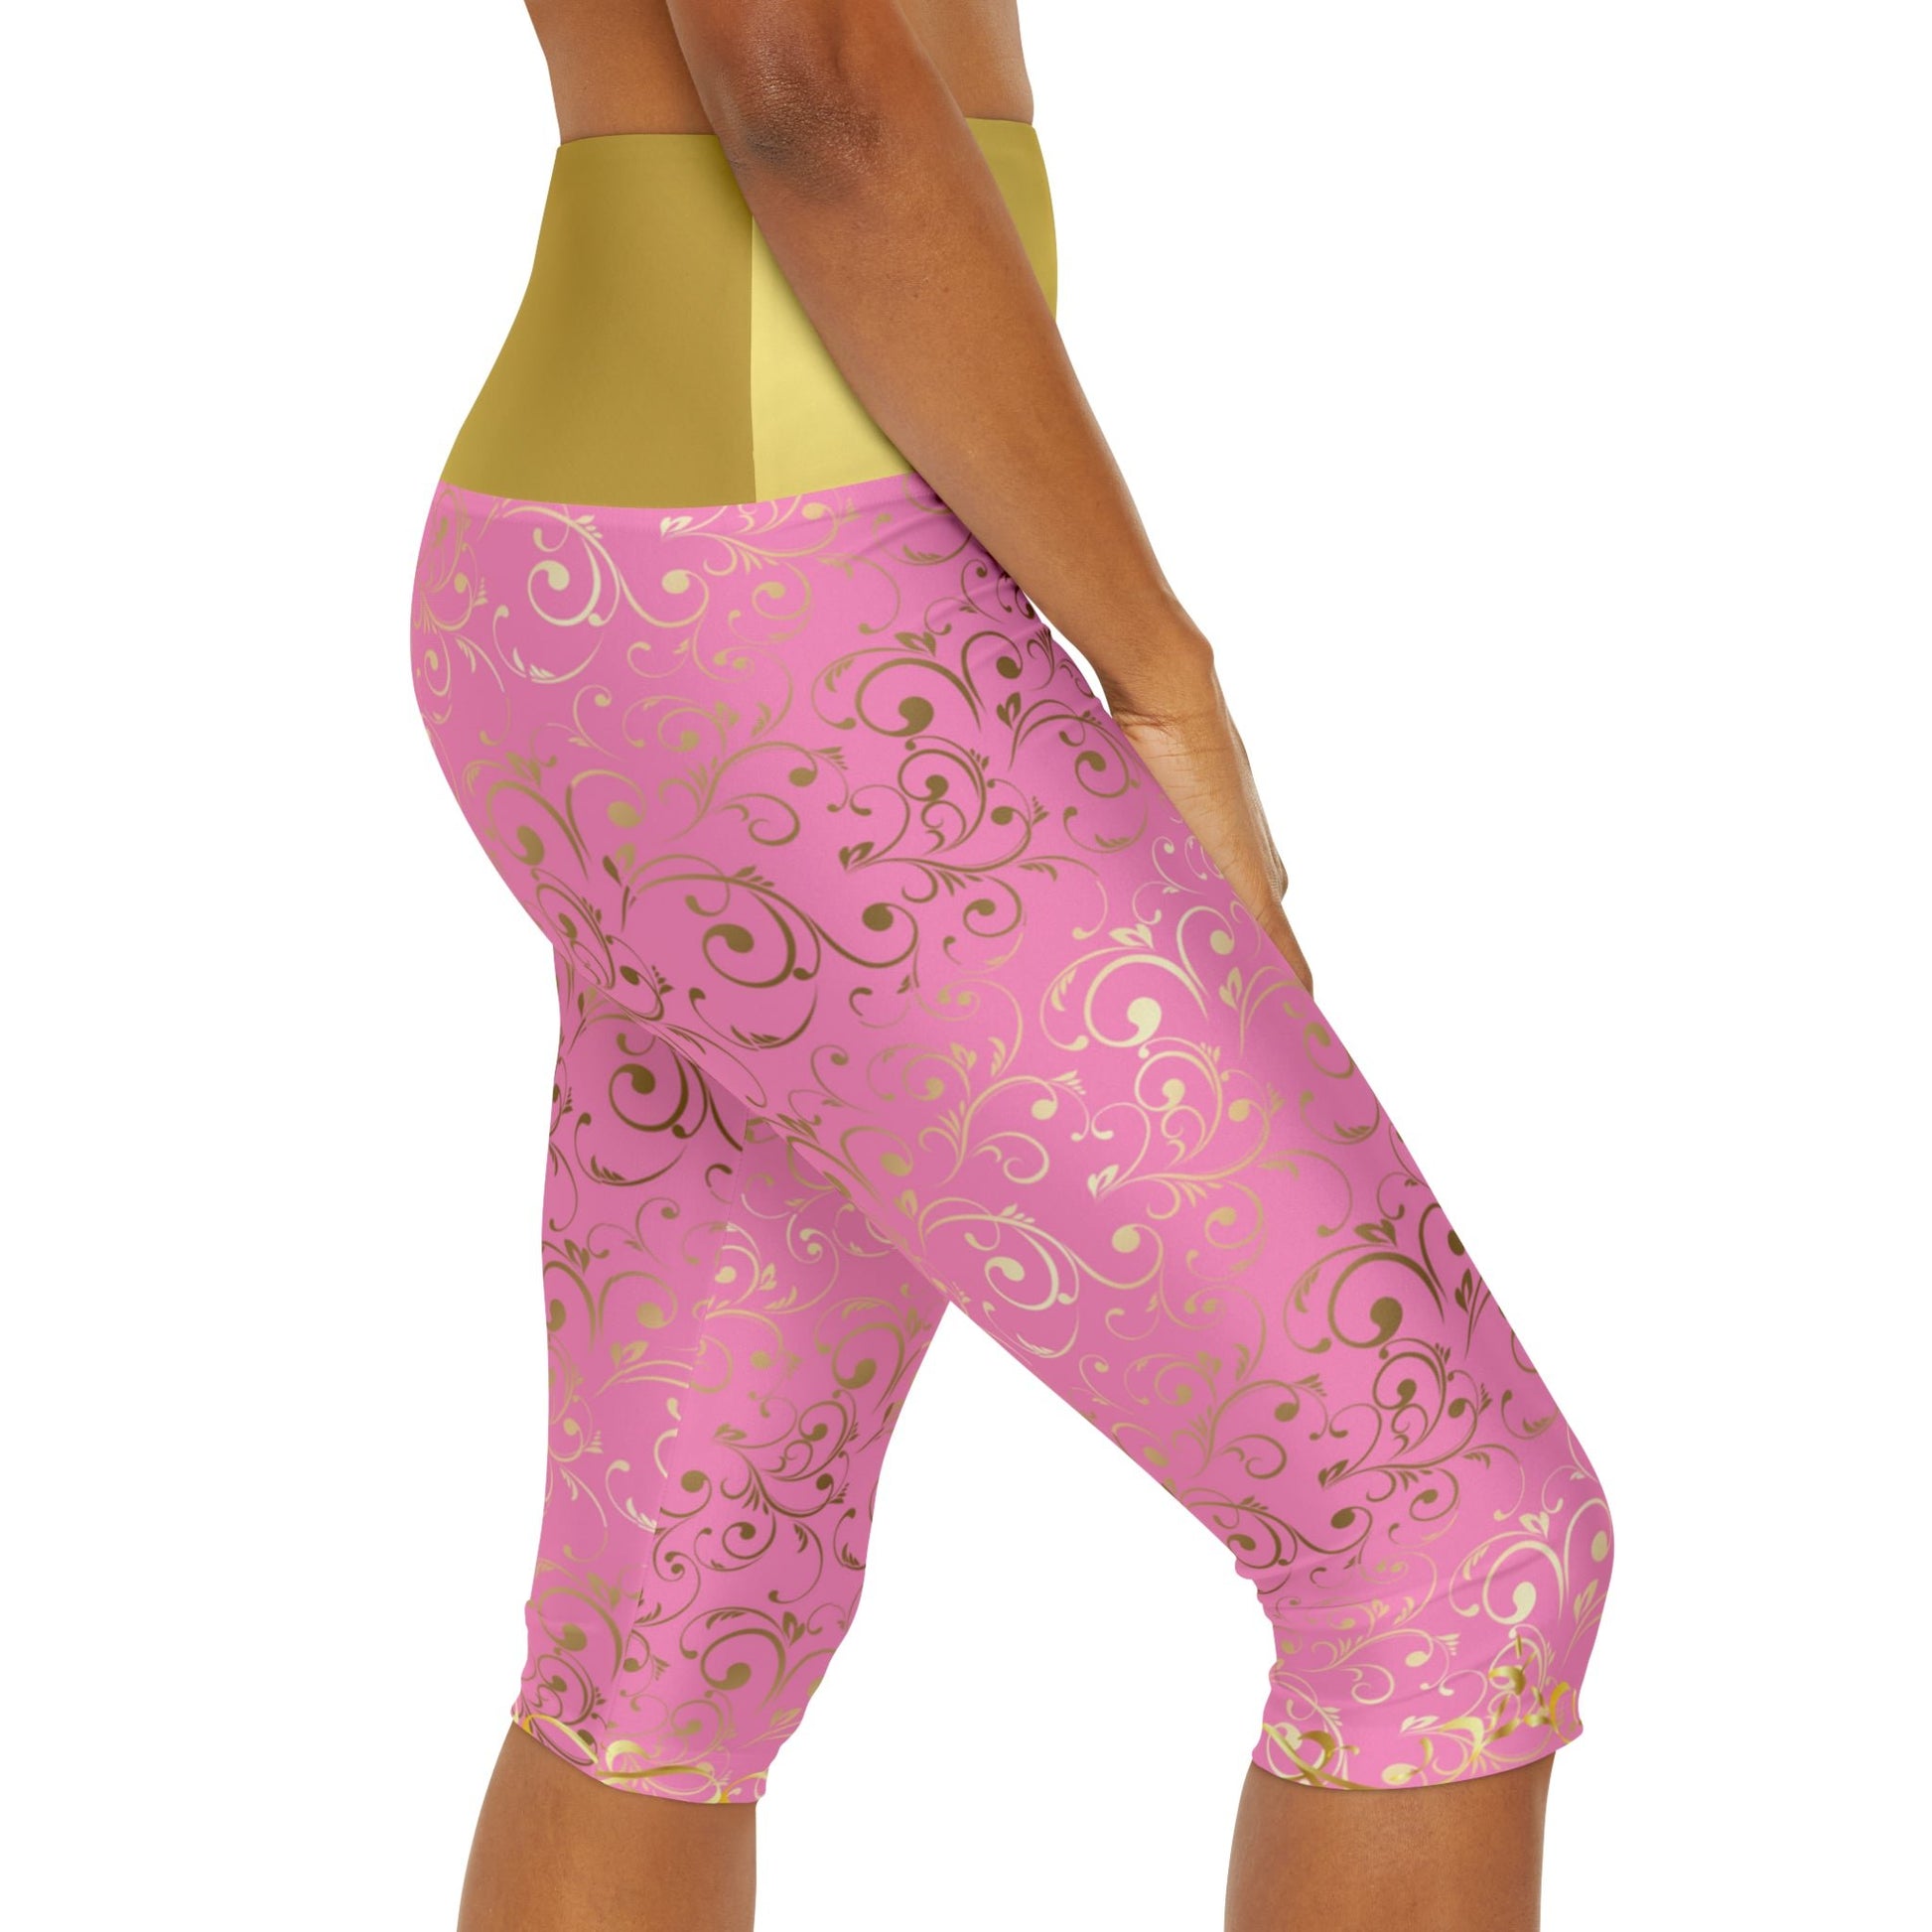 Sleeping Princess Yoga Capri Leggings - Running Costume, Cosplay All Over PrintAOPAOP Clothing#tag4##tag5##tag6#